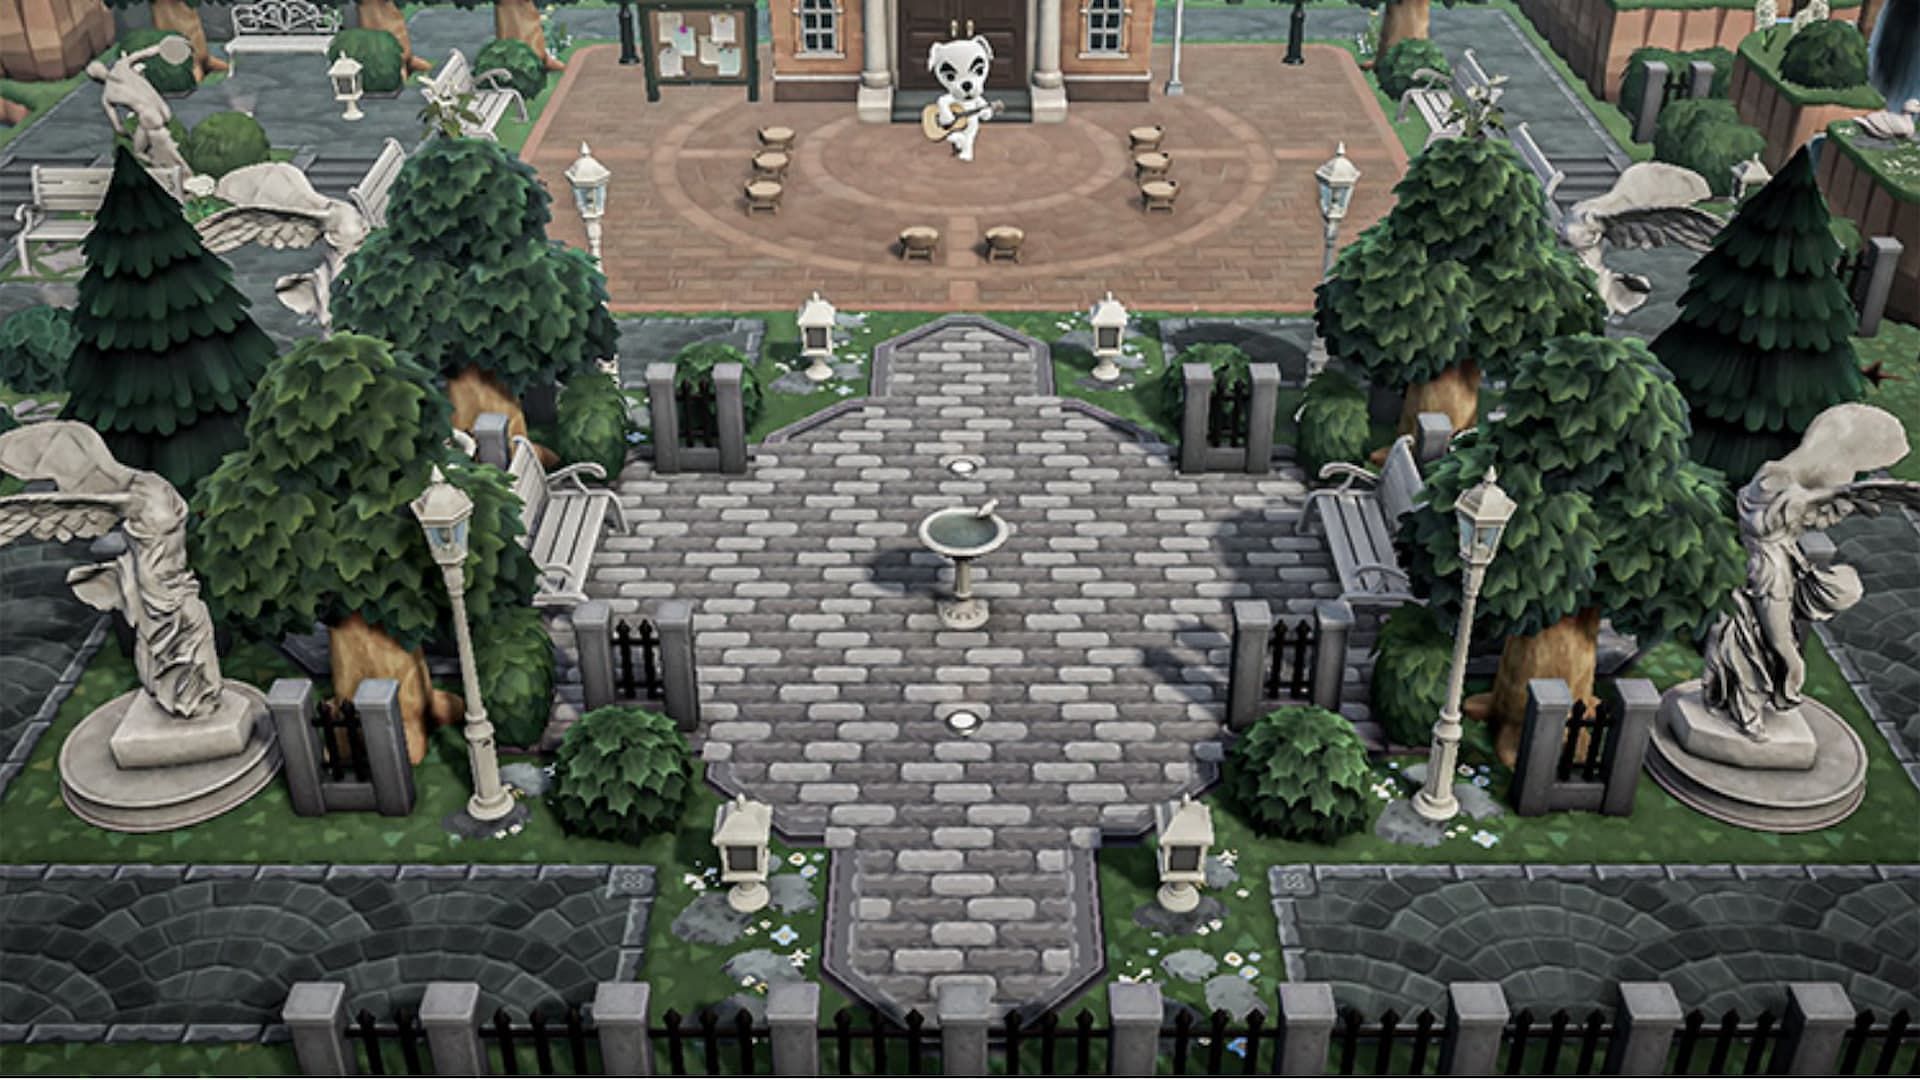 Courtyard-inspired island entrance design in the Animal Crossing: New Horizons (Image via Nintendo)